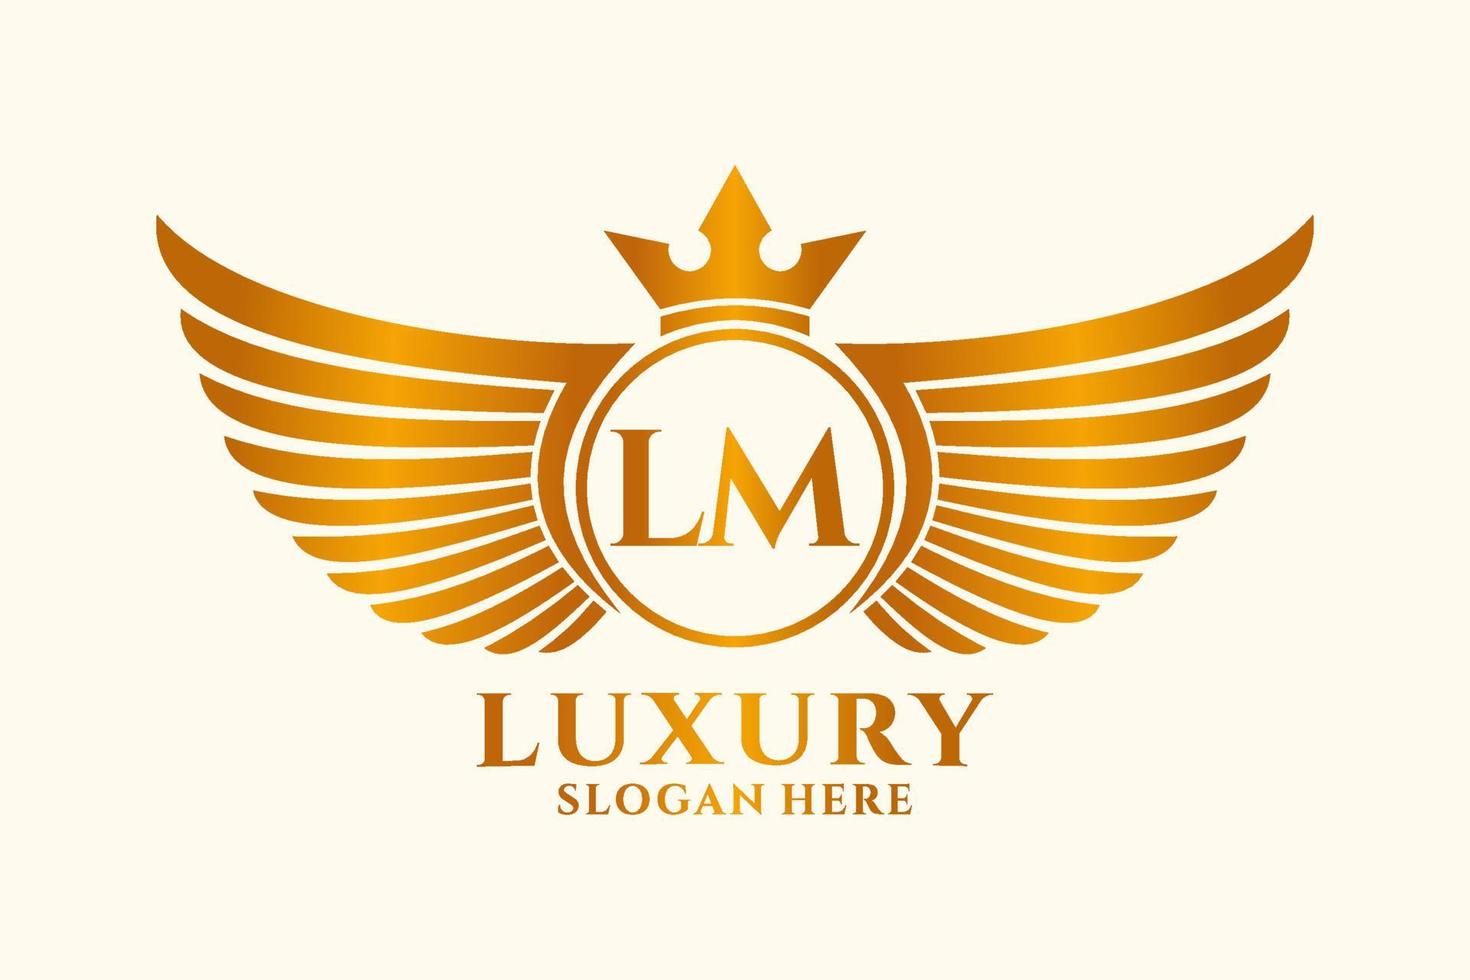 luxe Koninklijk vleugel brief lm kam goud kleur logo vector, zege logo, kam logo, vleugel logo, vector logo sjabloon.